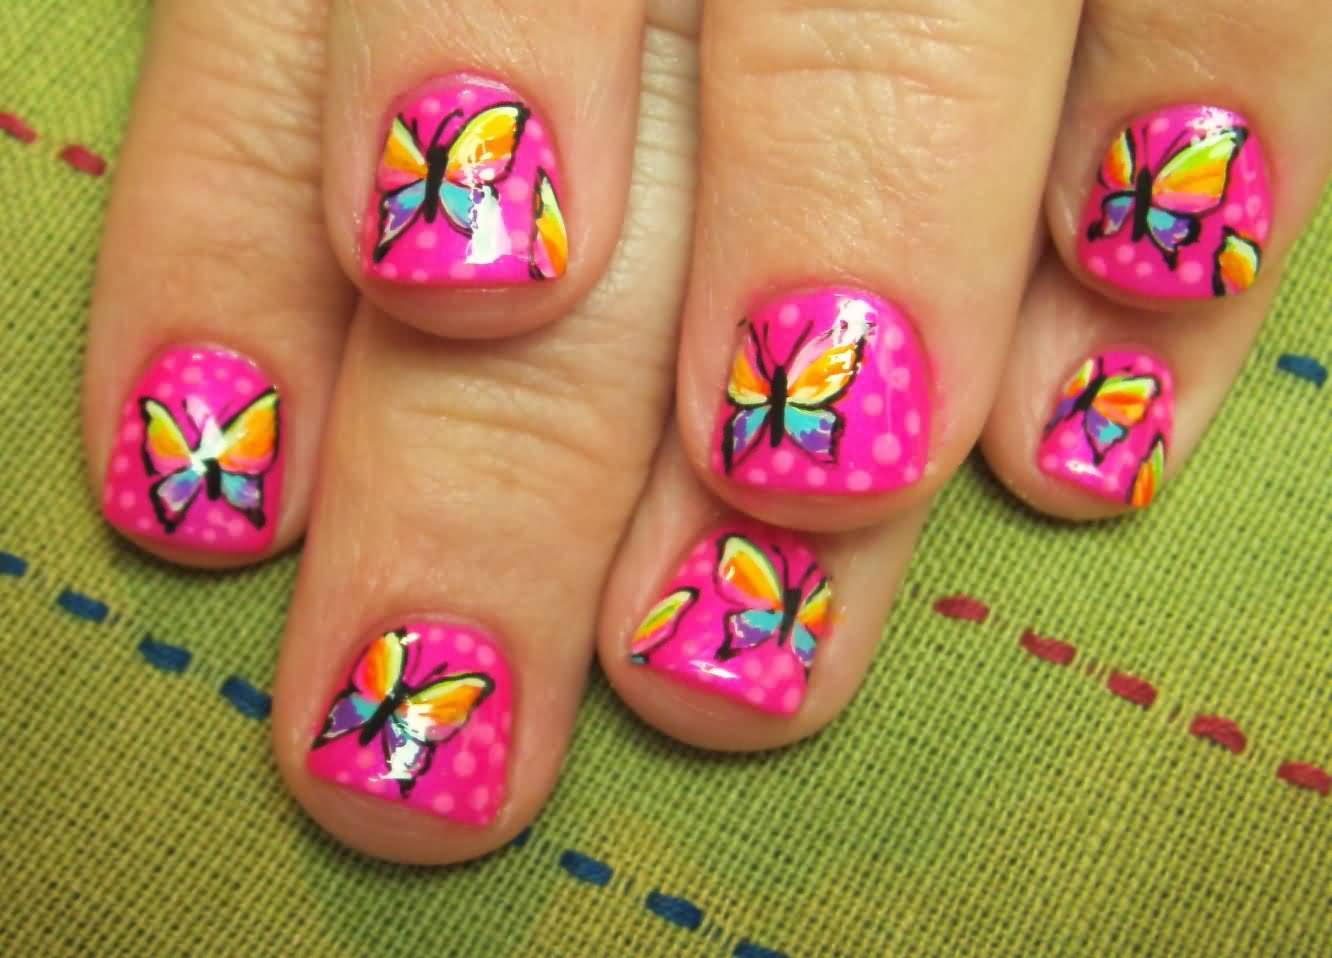 Pink Nails With Cute Butterflies Nail Art Design Idea